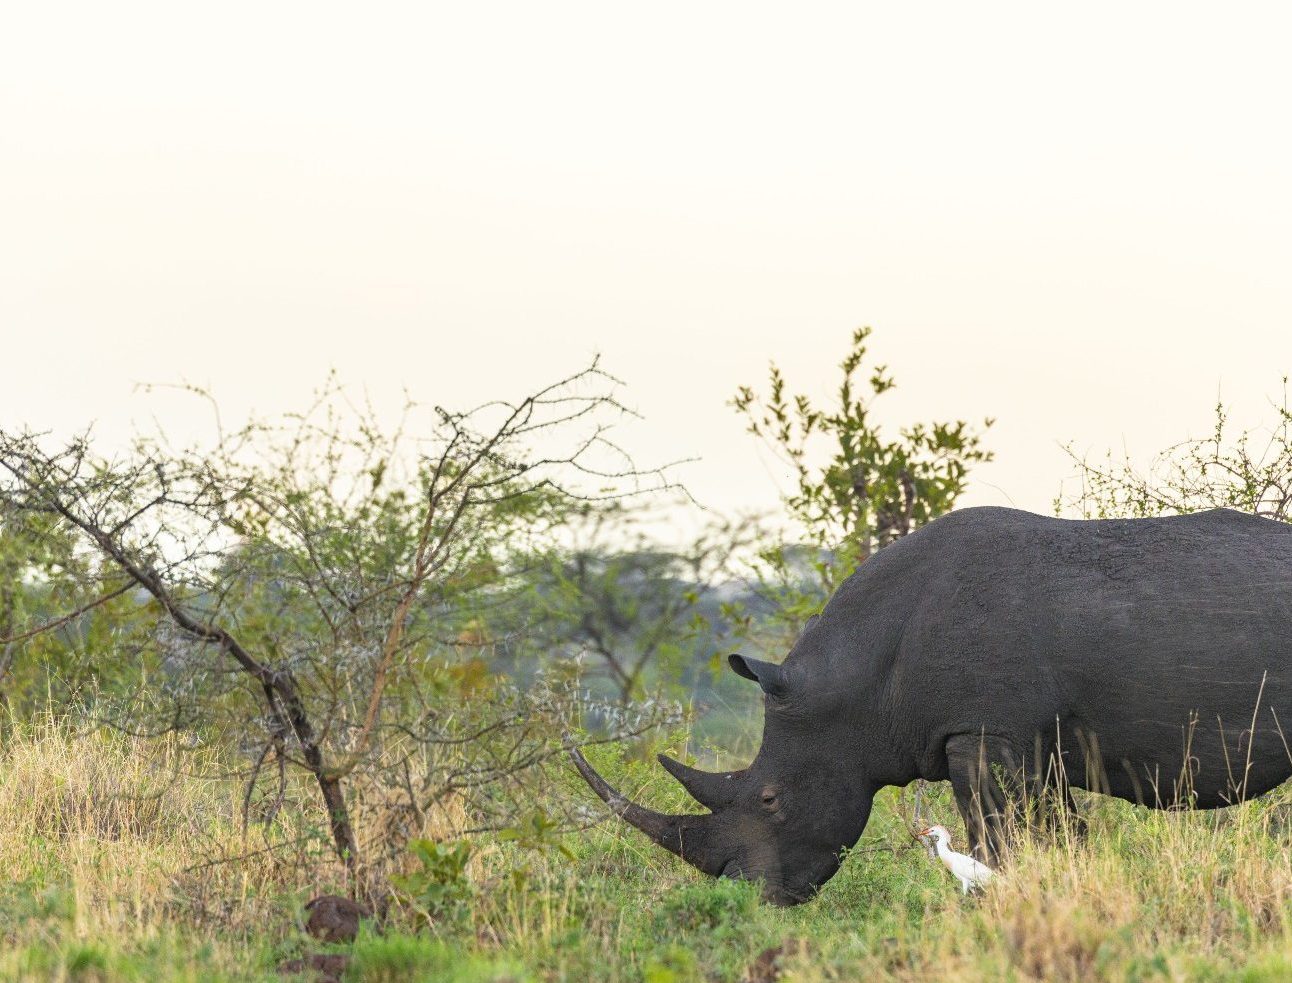 A rhino grazing in the savannah